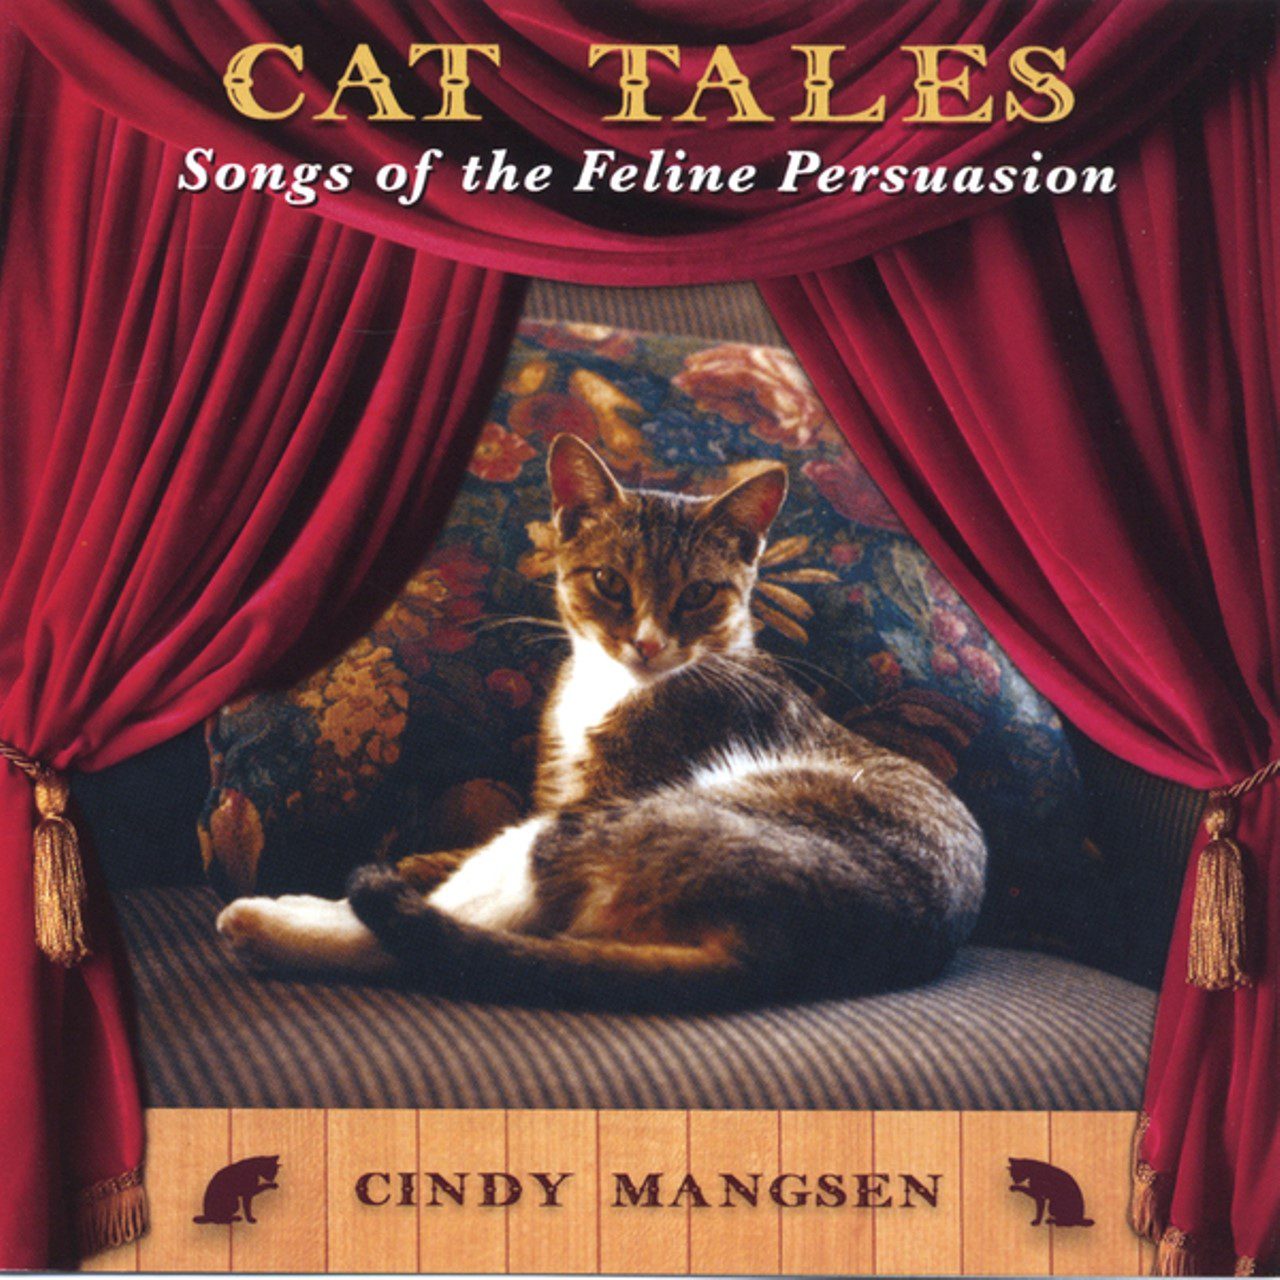 Cindy Mangsen - Cat Tales cover album